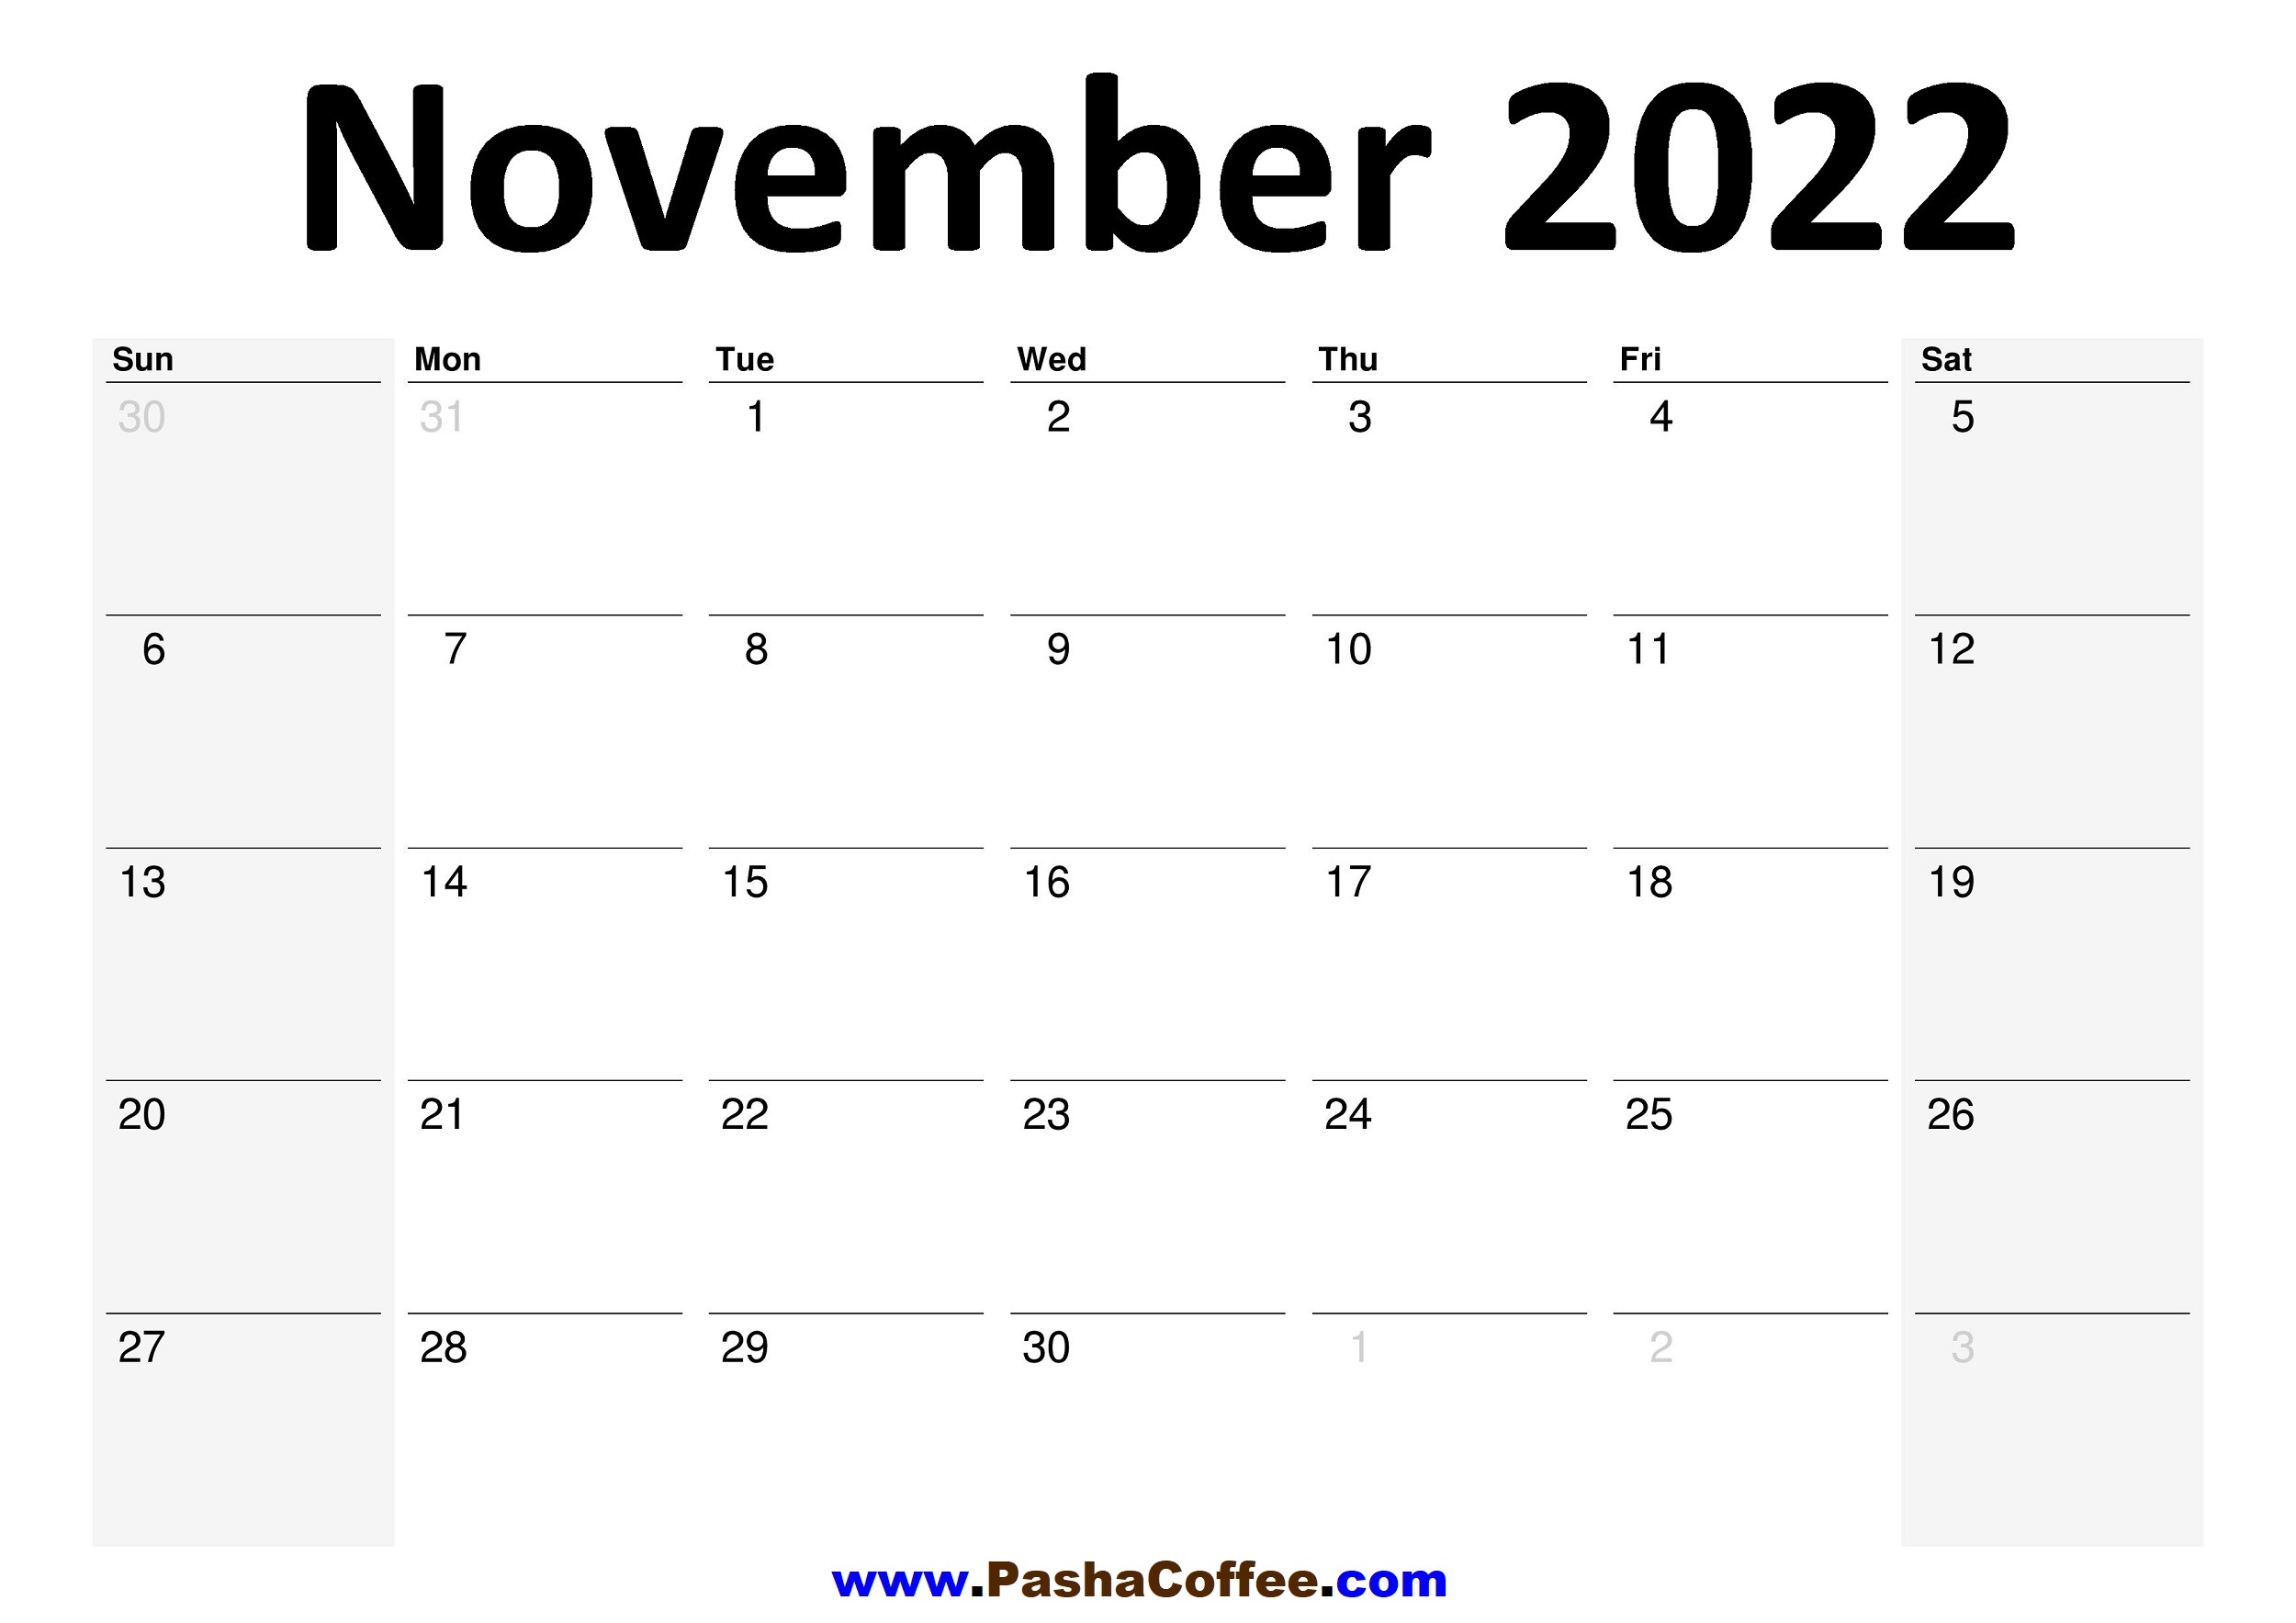 November 2022 Monthly Calendar 2022 November Calendar Planner Printable Monthly – Pashacoffee.com